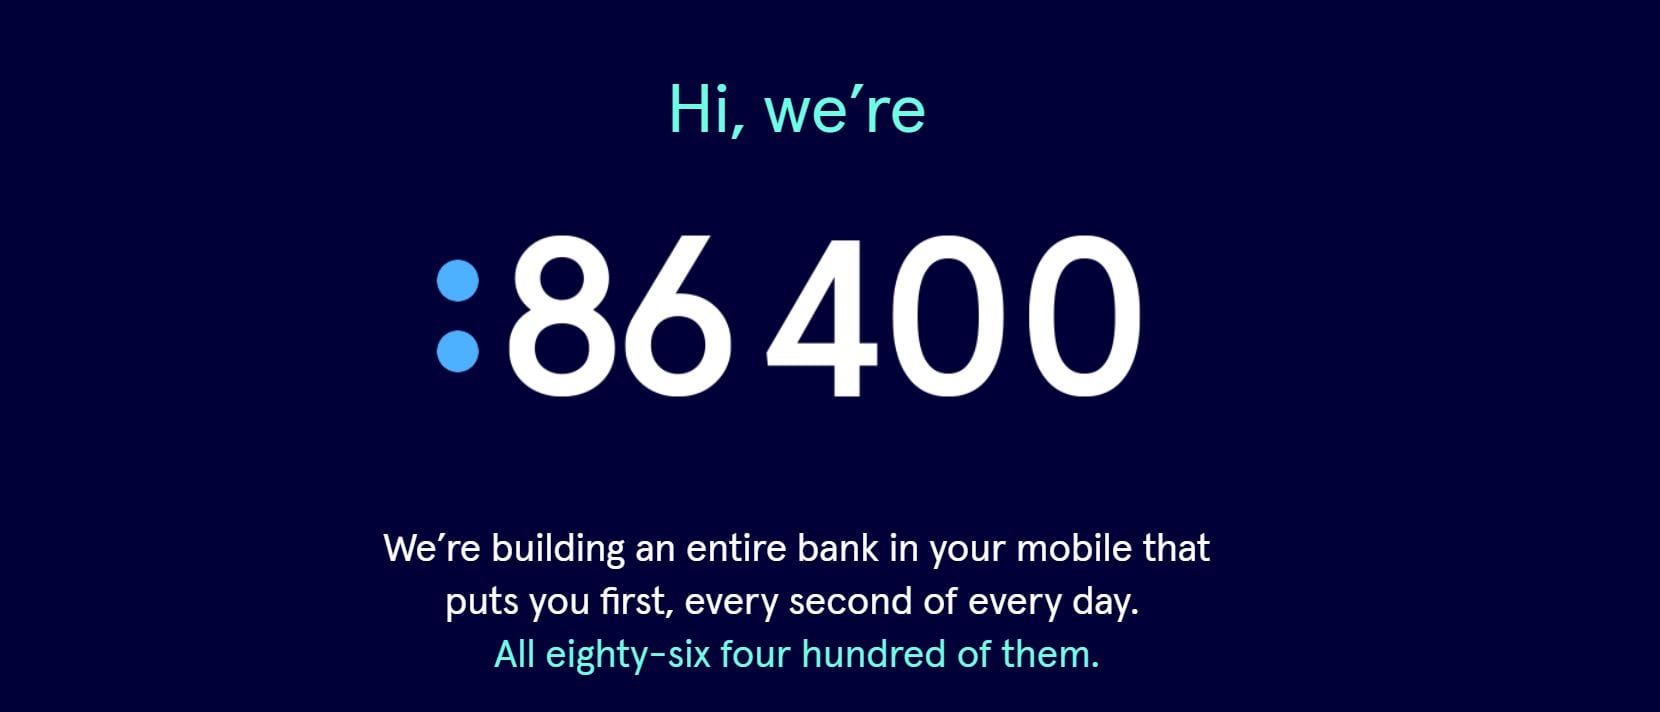 Digital Bank is launching in Australia